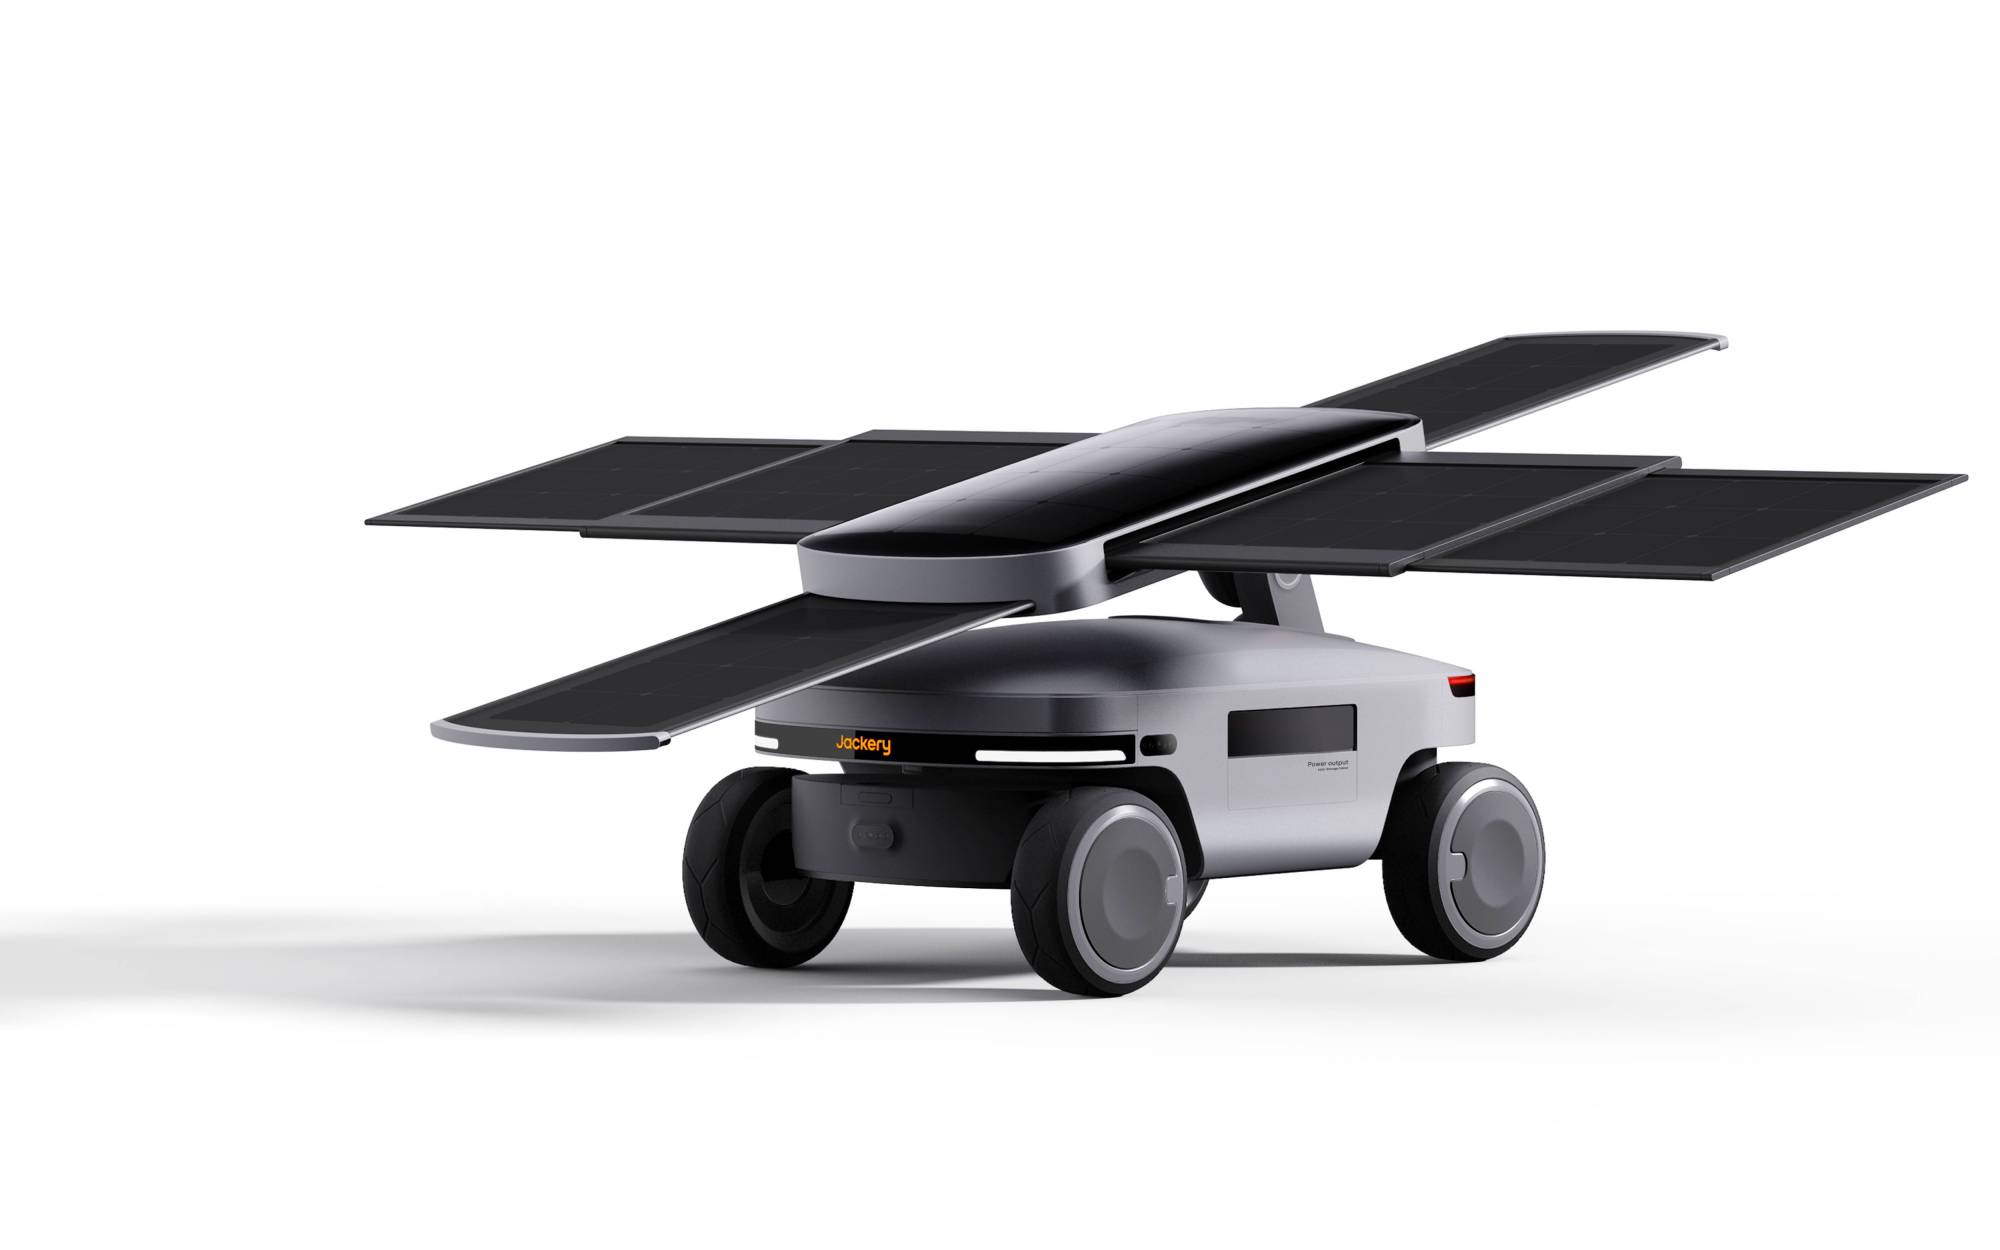 Jacker Solar Generator Mars Bot